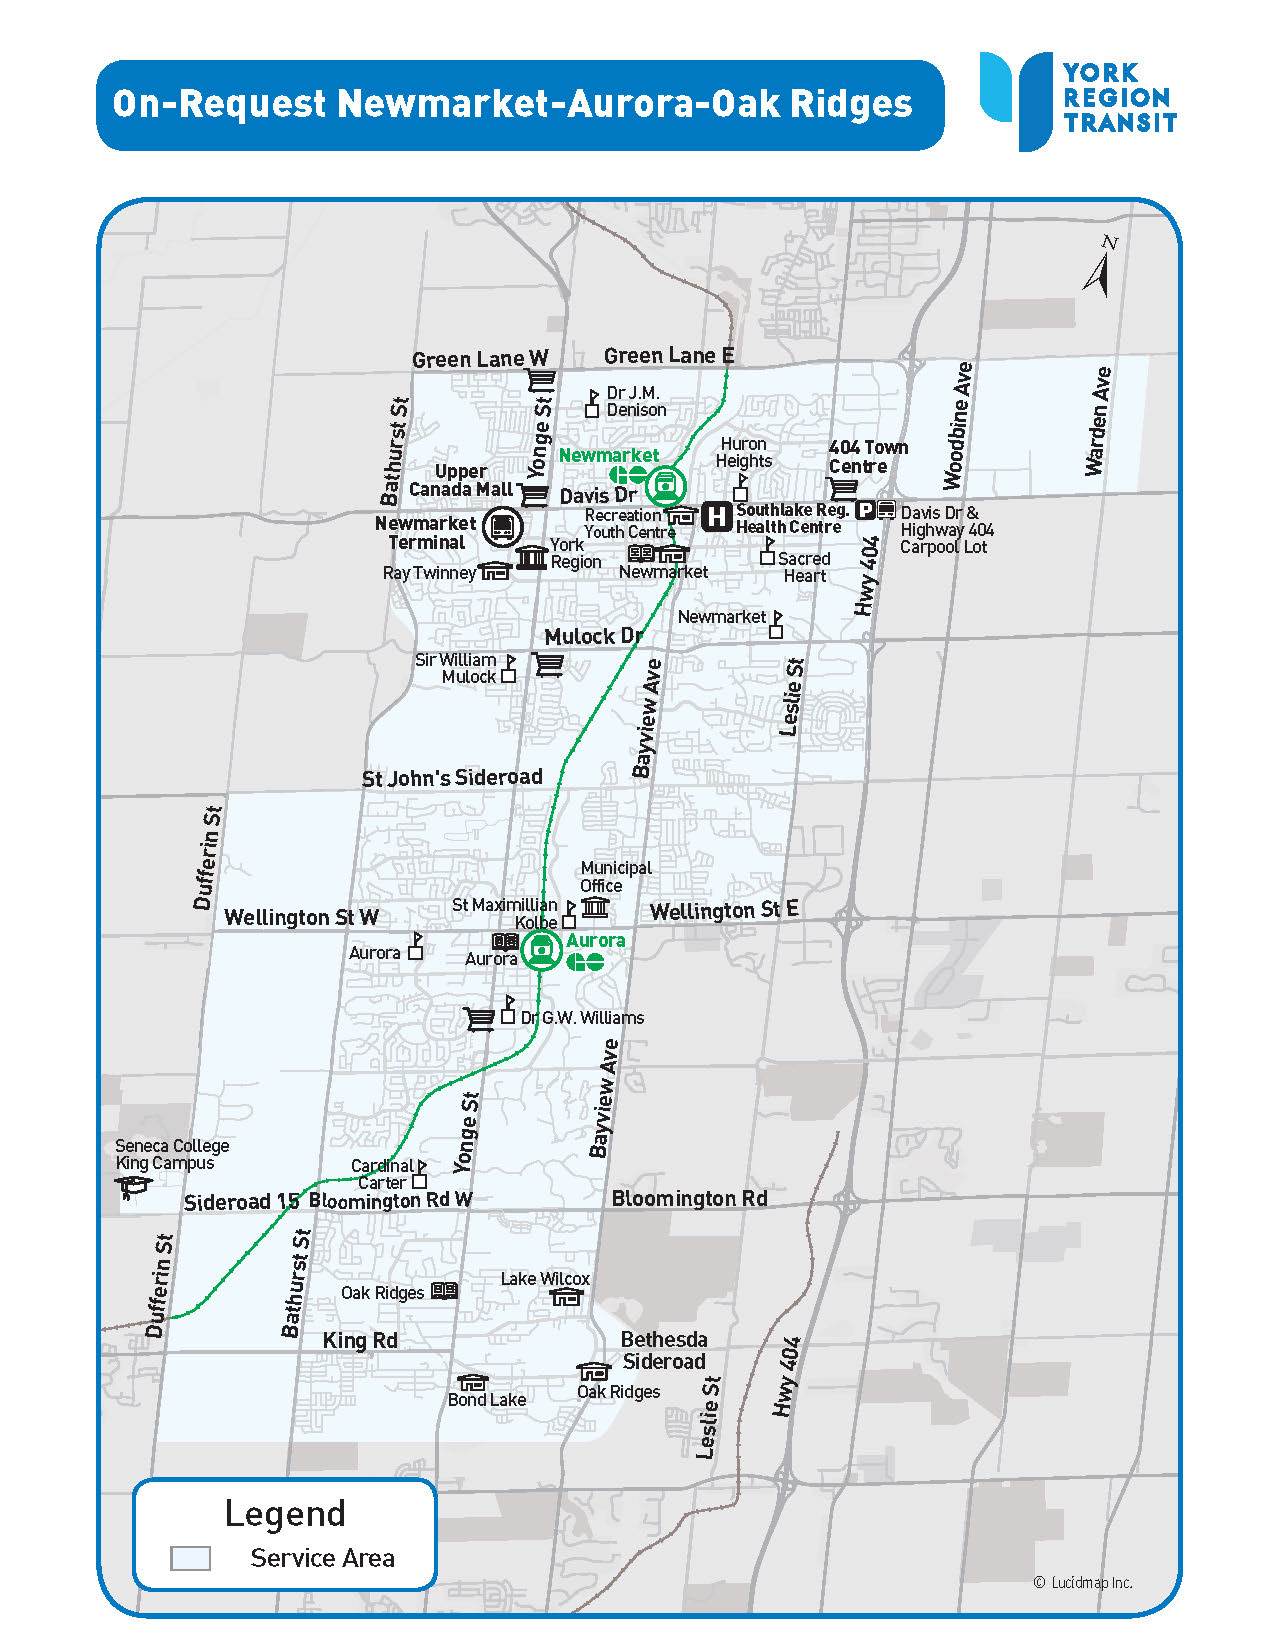 On-Request Newmarket-Aurora-Oak Ridges service area map